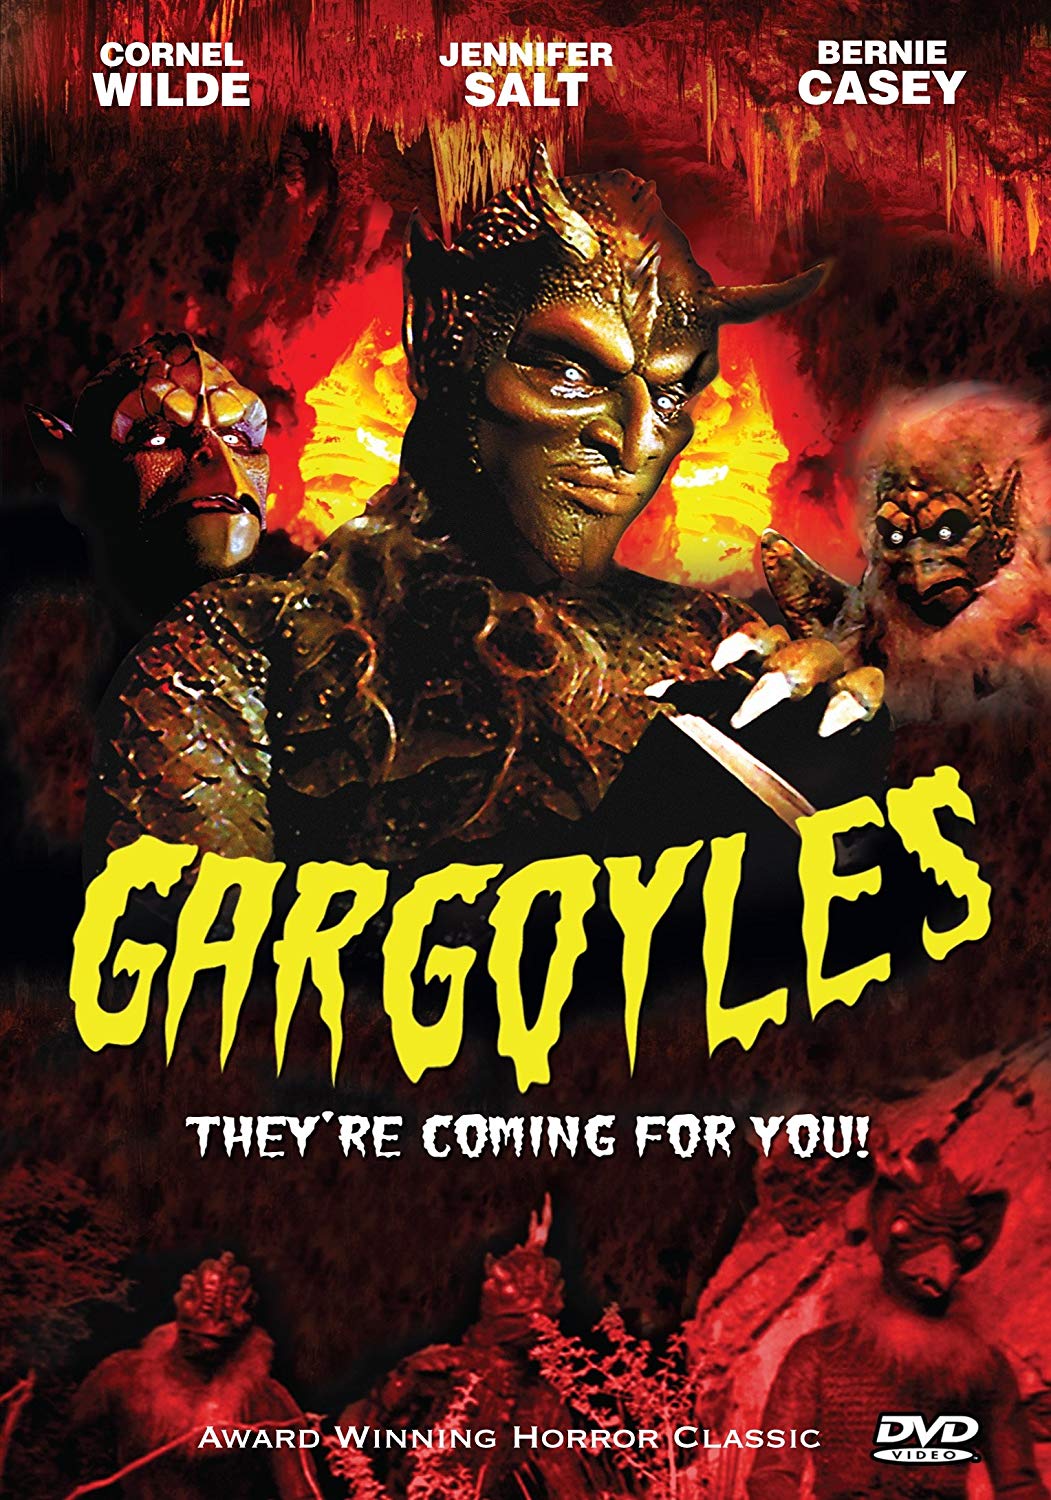 Gargoyles (1972) starring Cornel Wilde, Jennifer Salt, Grayson Hall, Bernie Casey